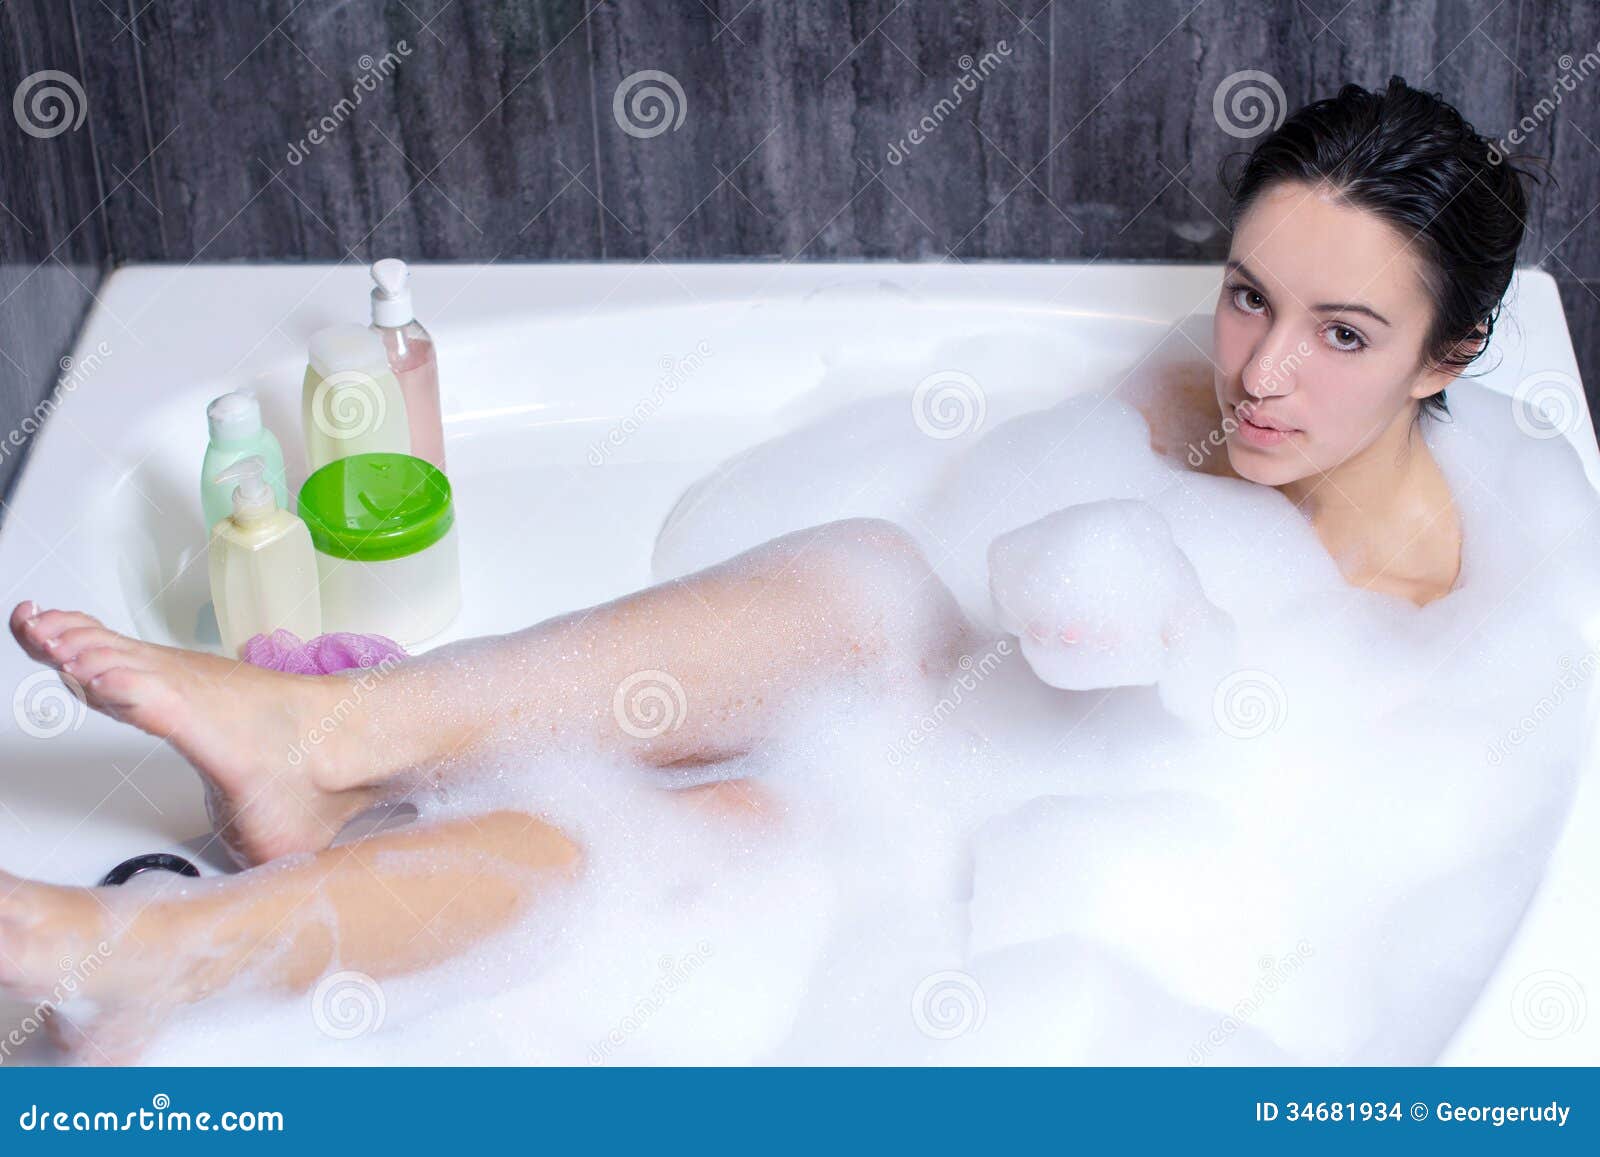 Алина моется в ванне (25 фото)